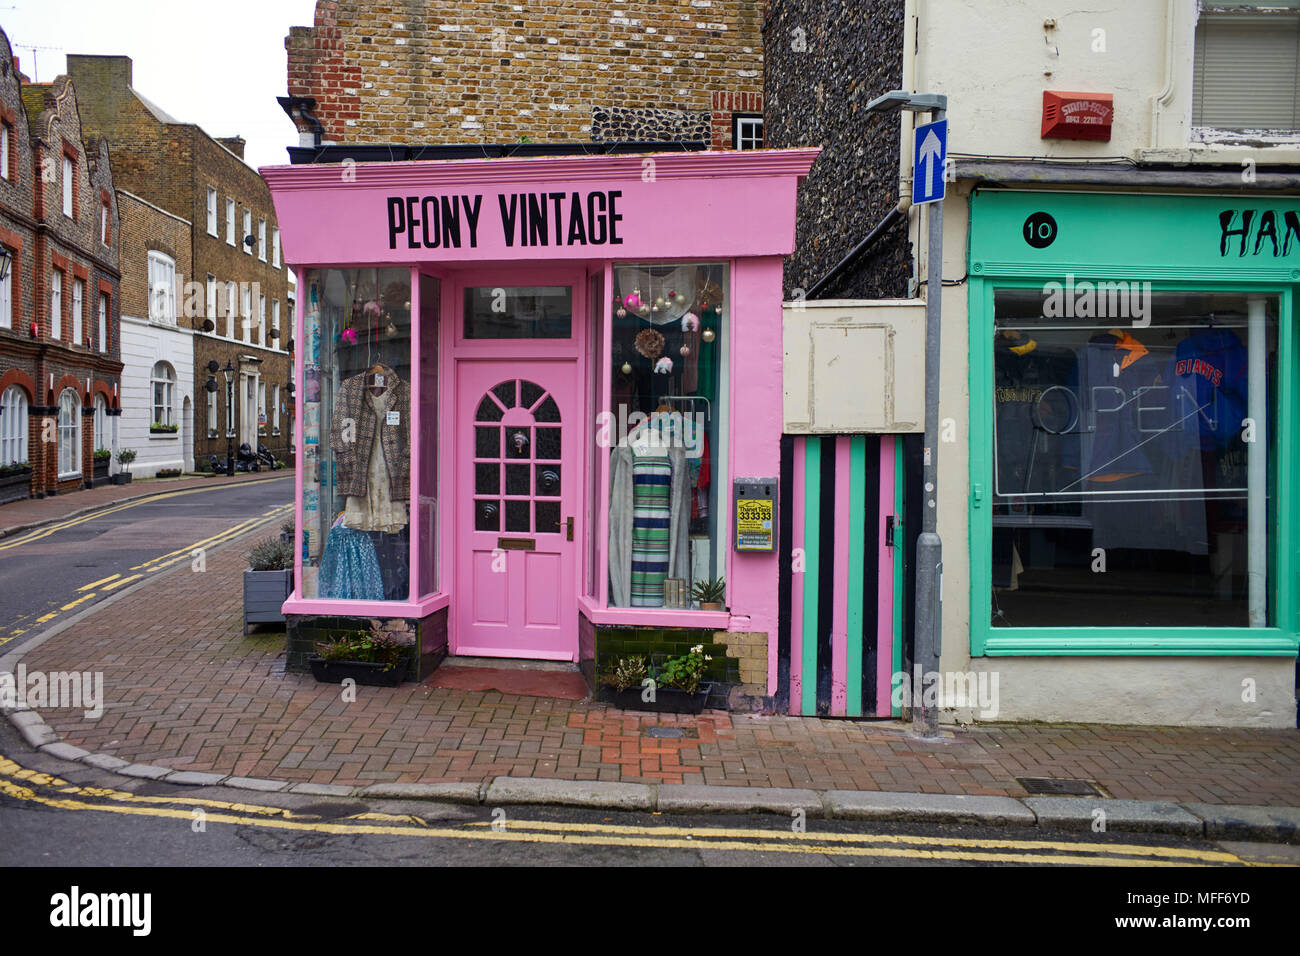 Tienda de ropa de mujer vintage Peony en King Street, Margate Foto de stock